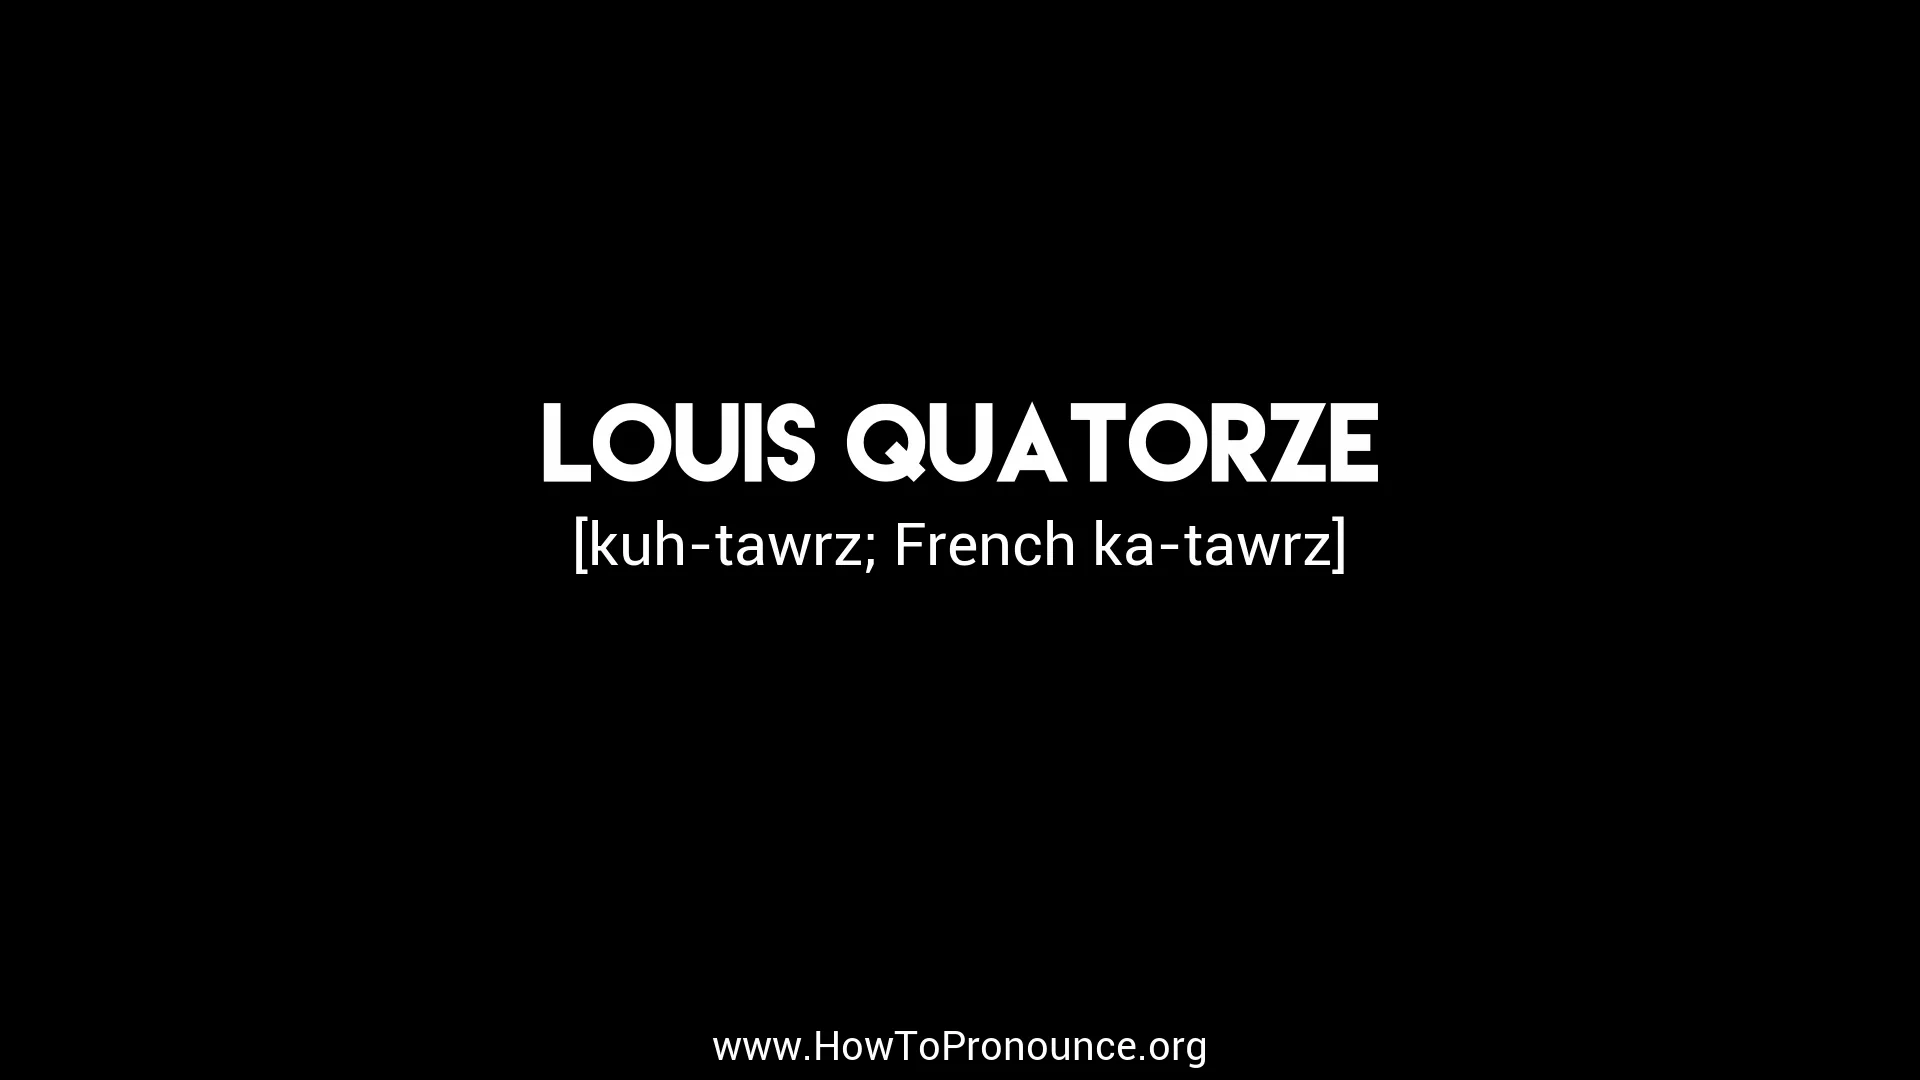 How to Pronounce louis quatorze on Vimeo